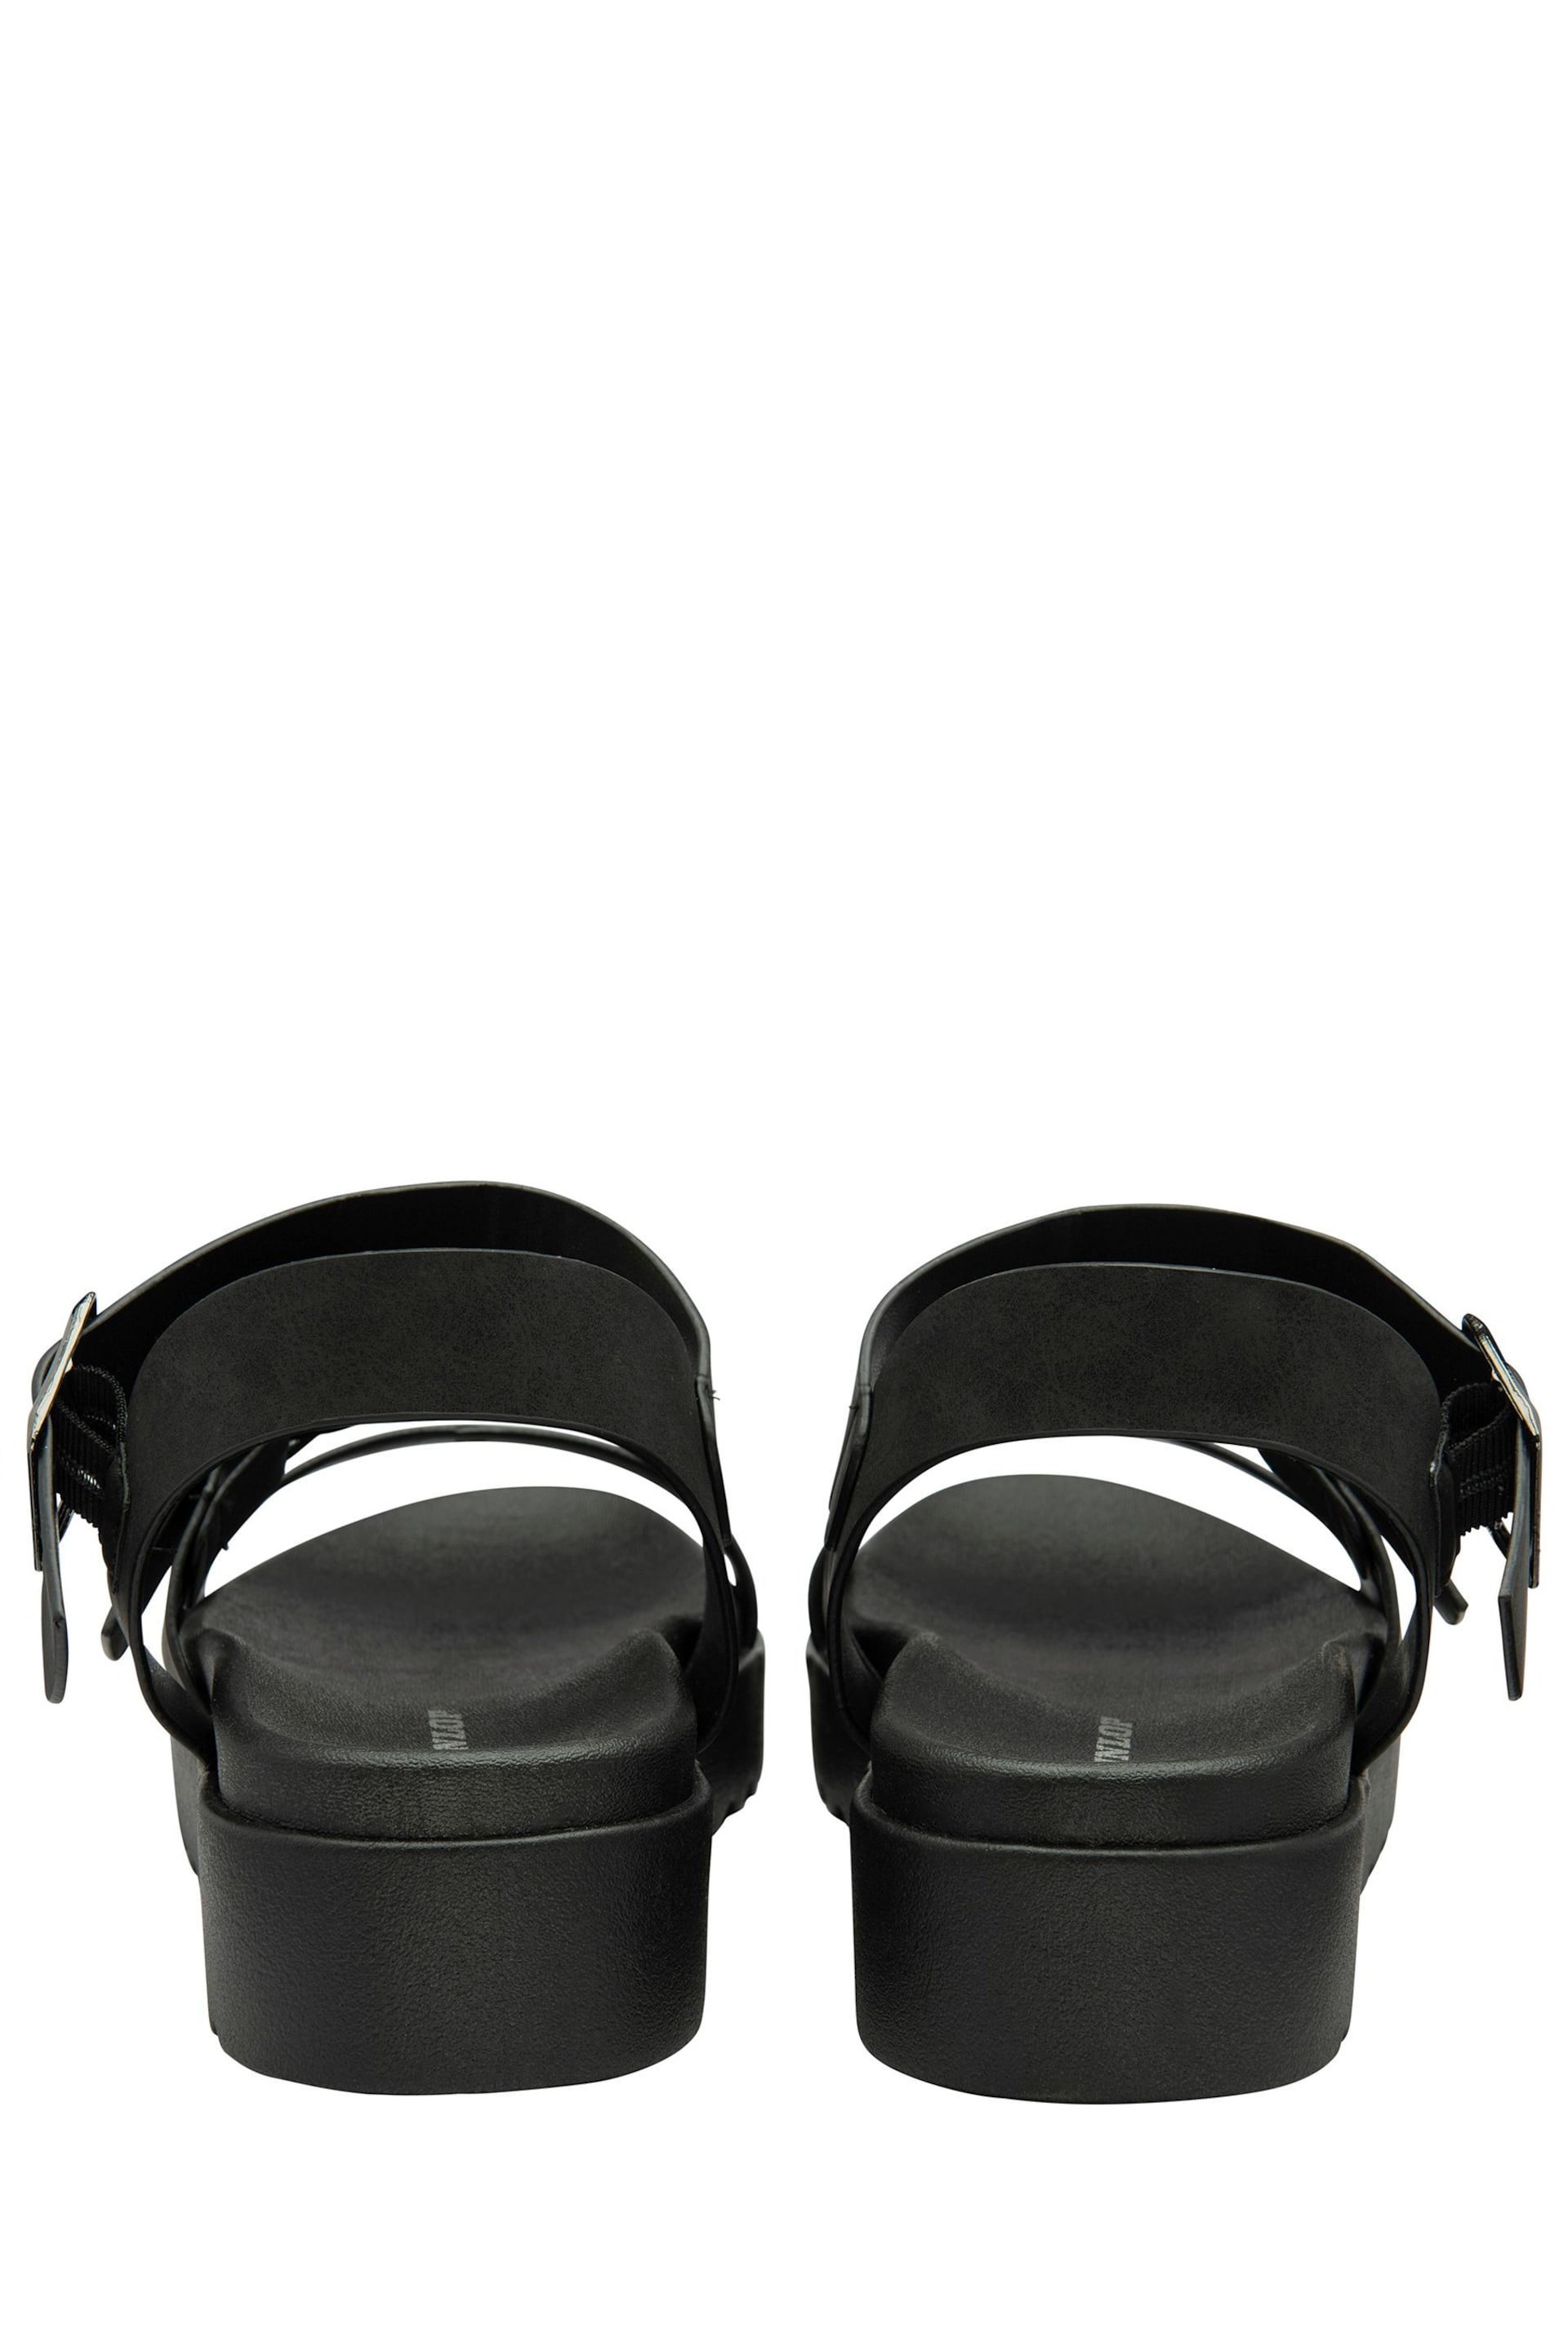 Dunlop Black Ladies Flatform Sandals - Image 3 of 4